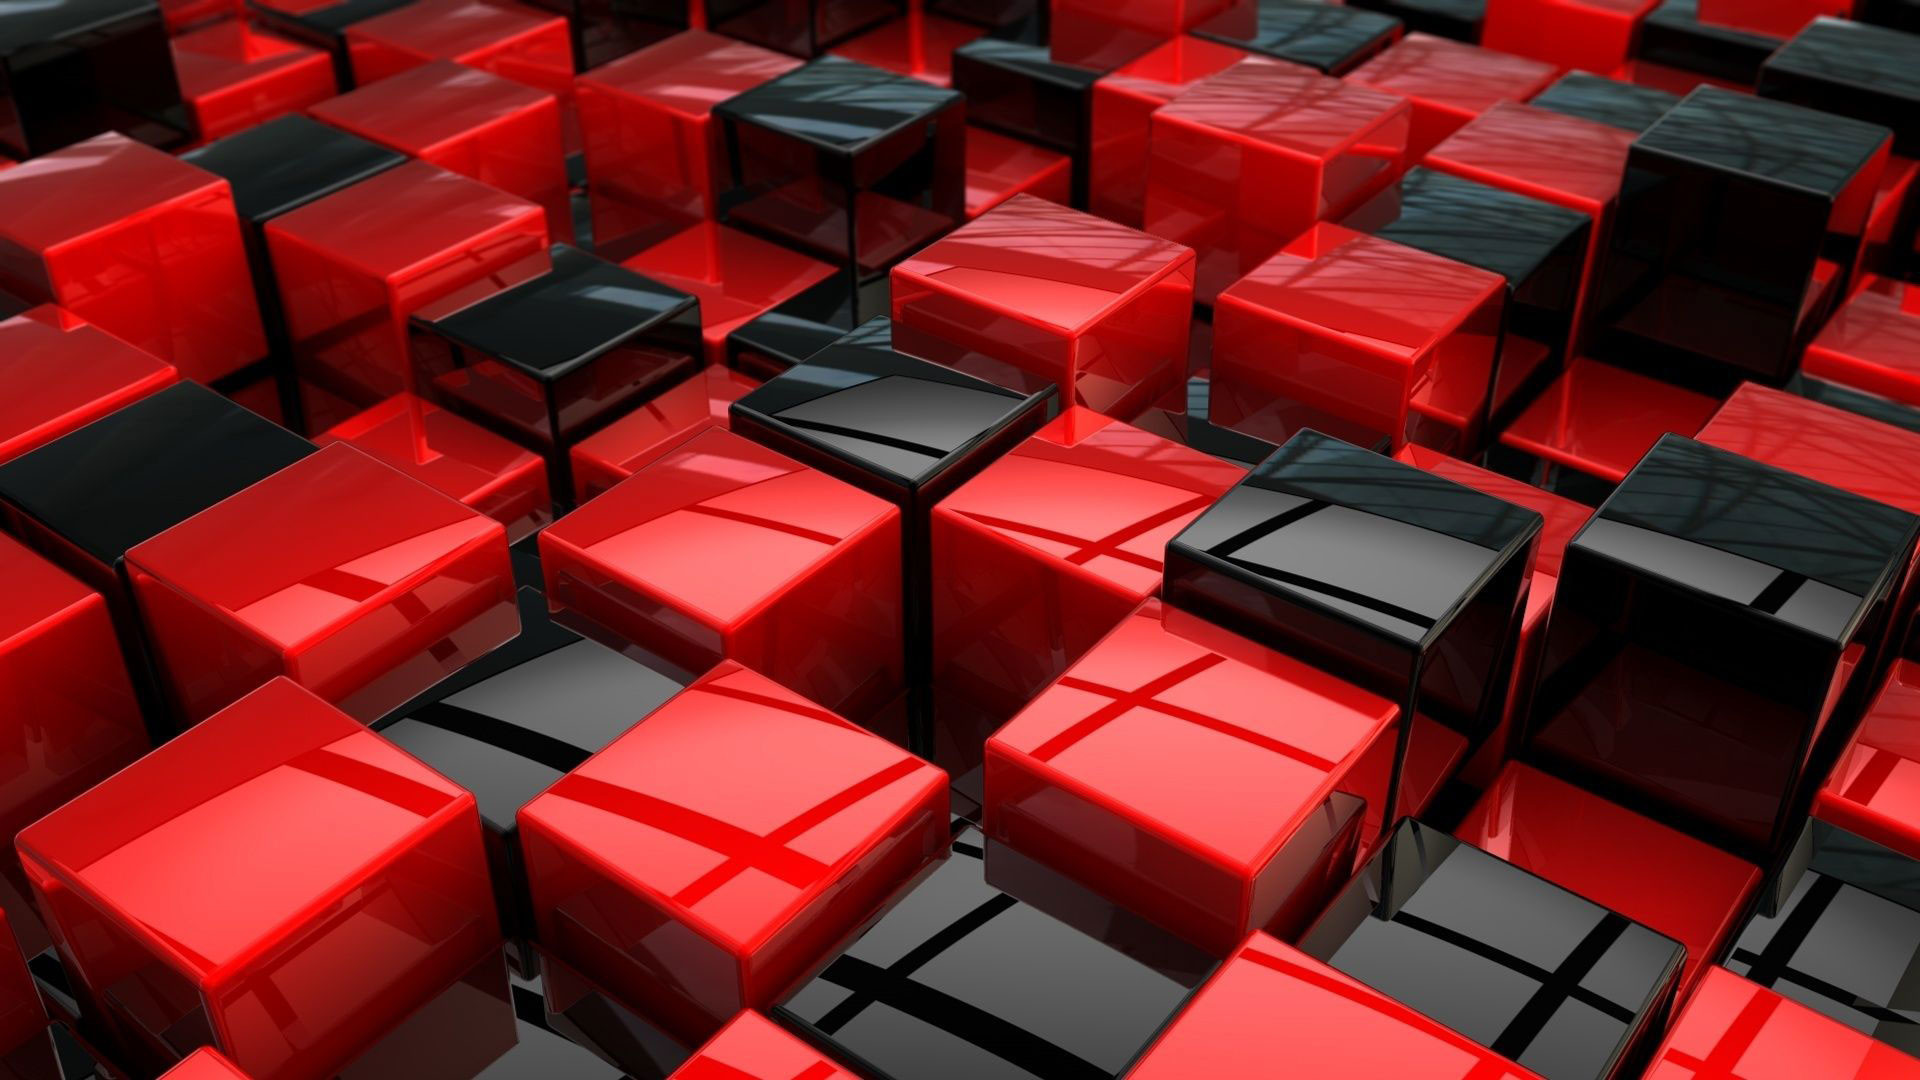 hd pics photos red and black 3d cubes desktop background wallpaper